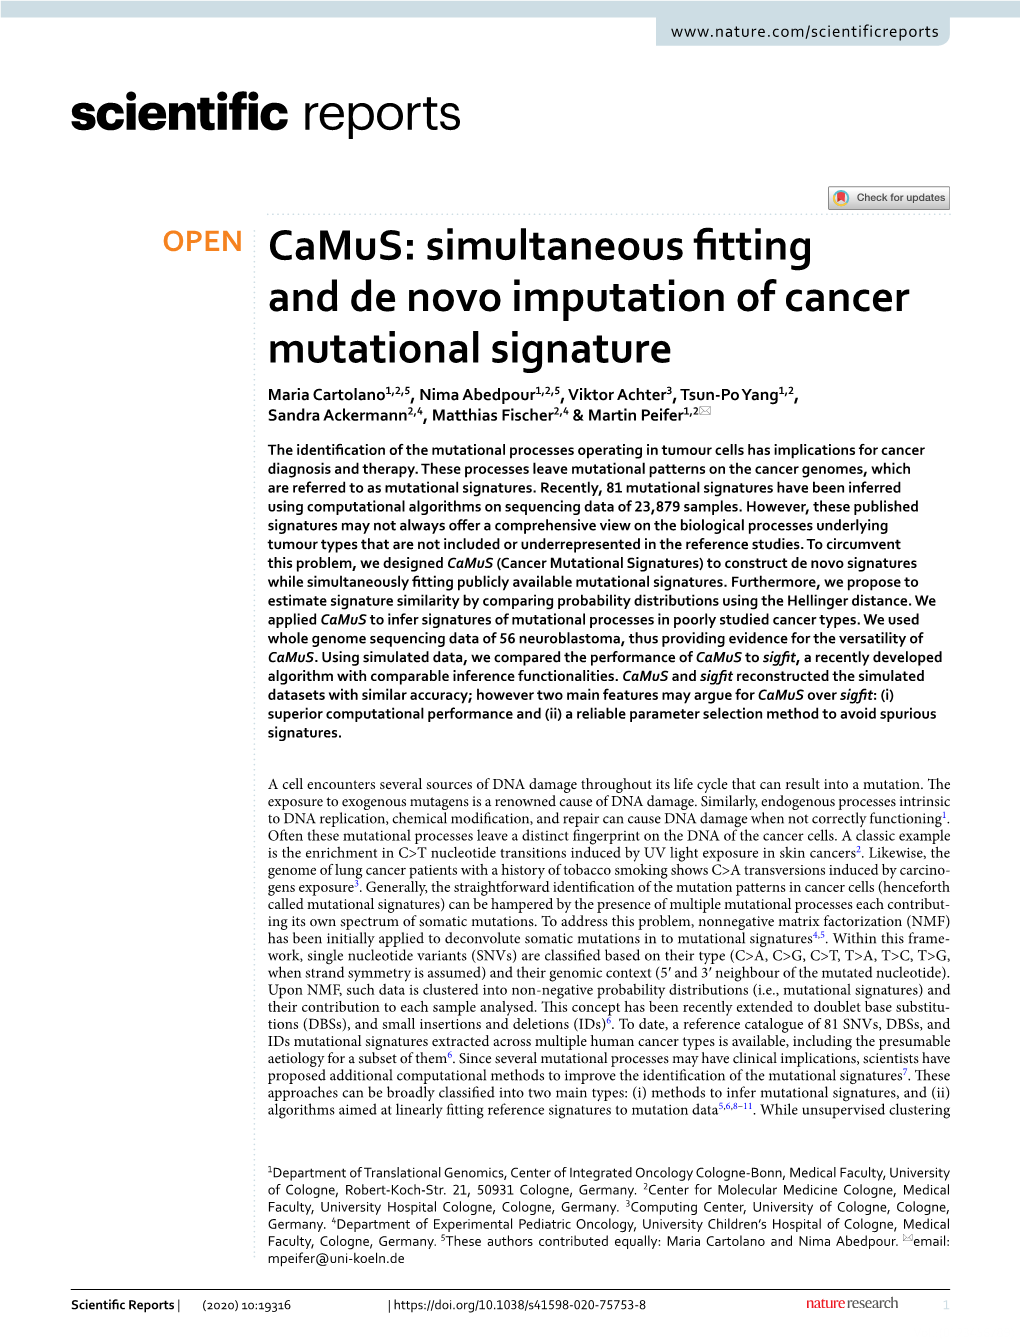 Simultaneous Fitting and De Novo Imputation of Cancer